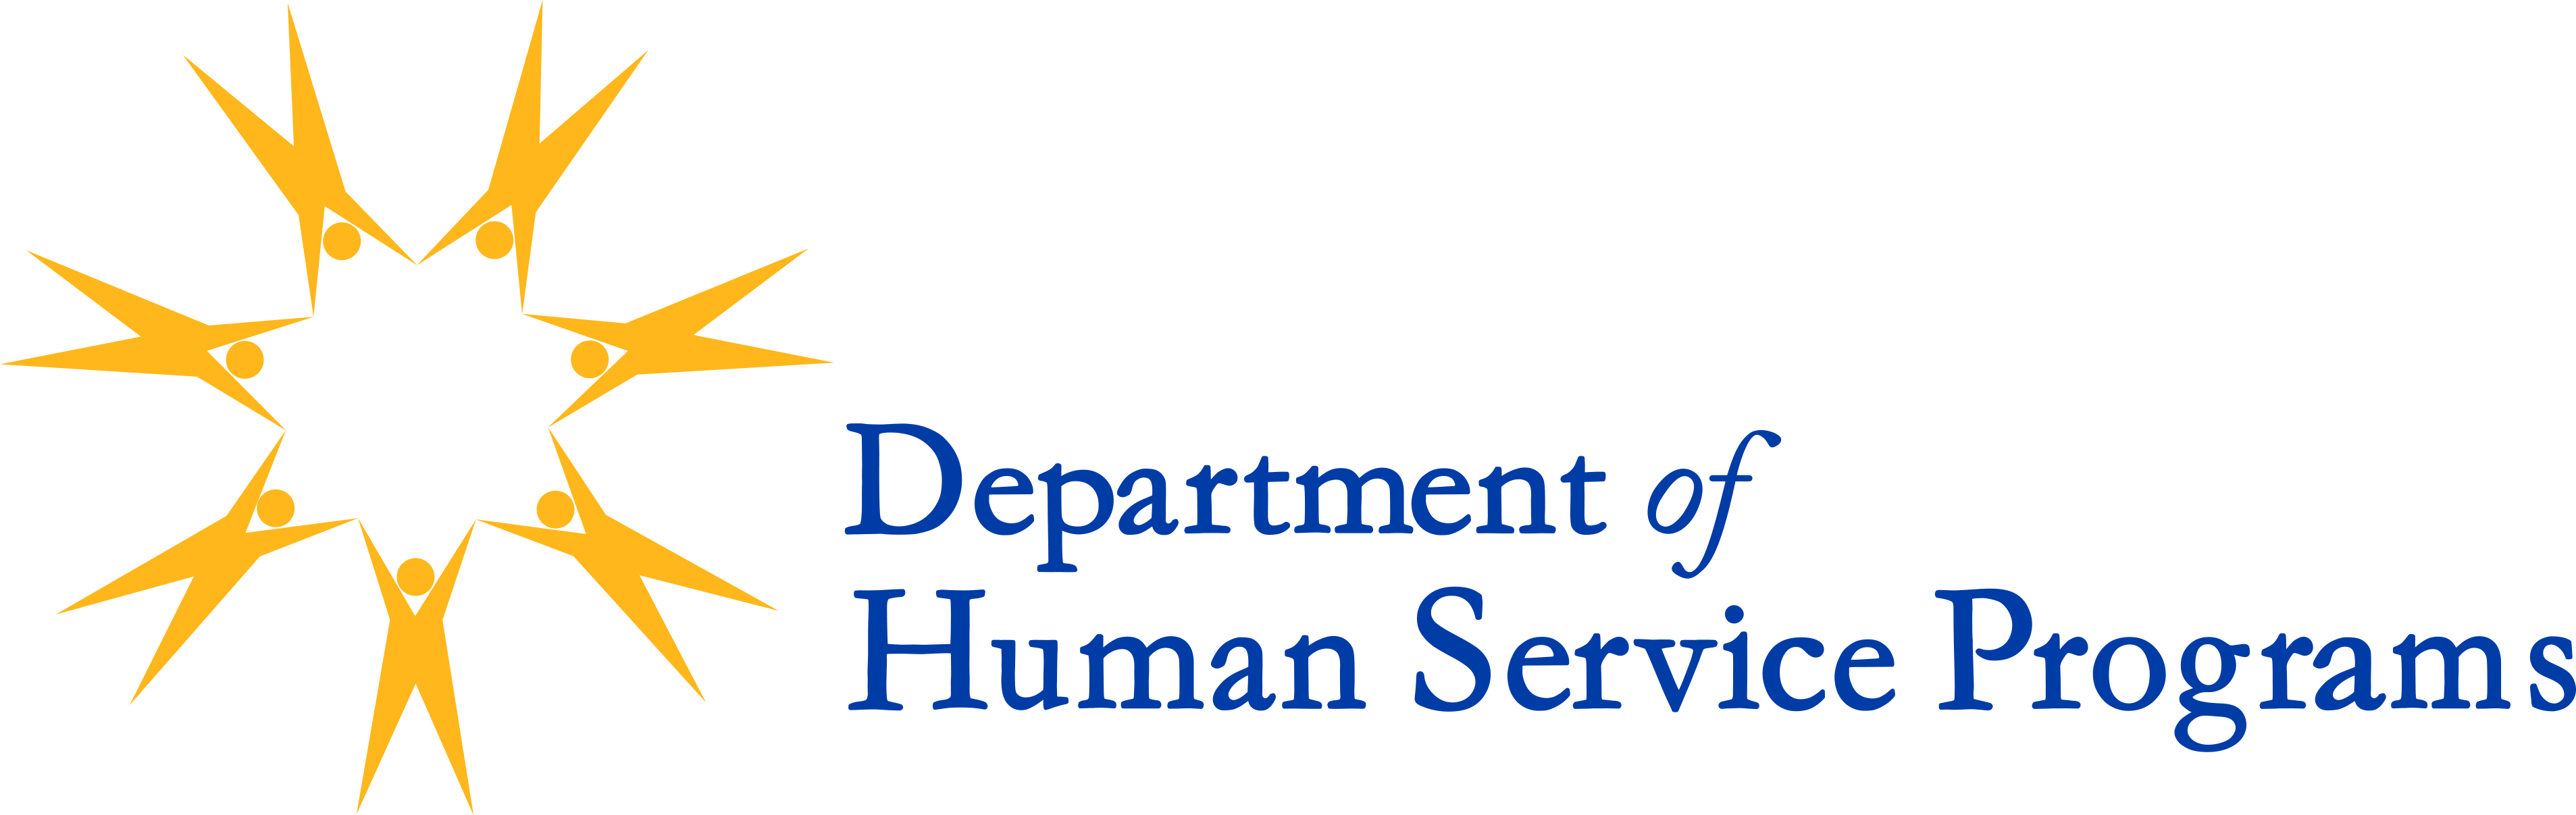 Department of Human Service Programs (DHSP) Logo